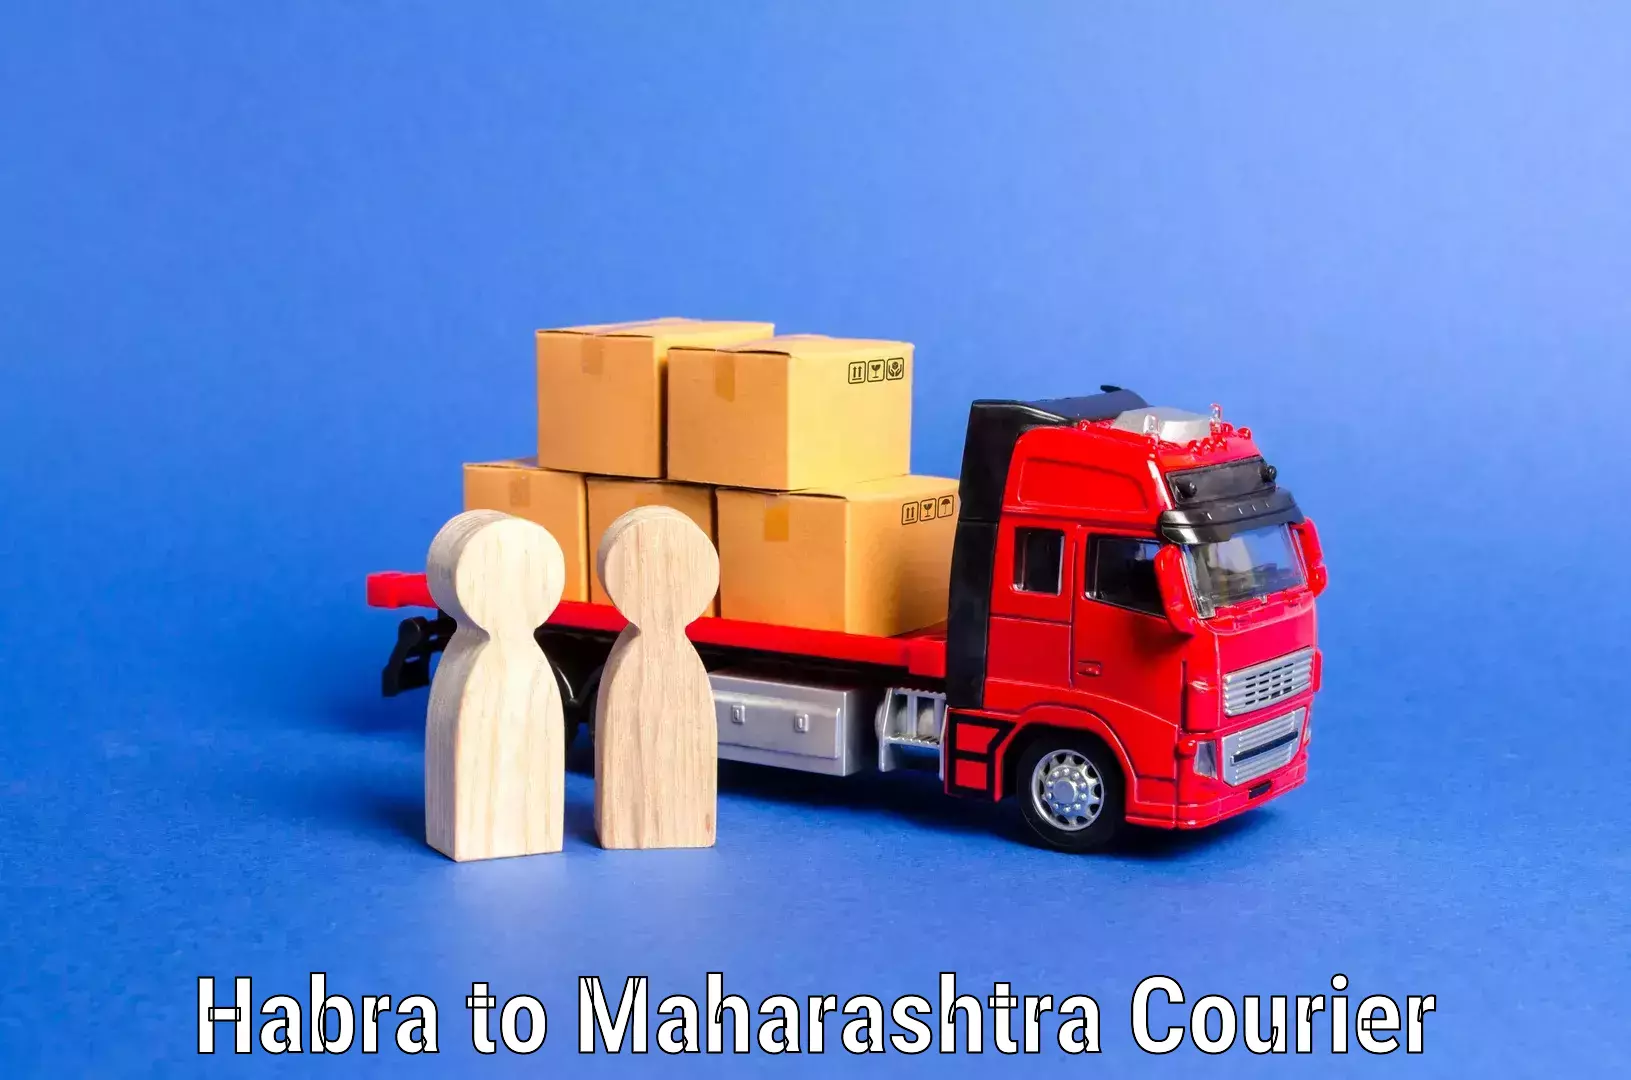 Furniture delivery service Habra to Maharashtra